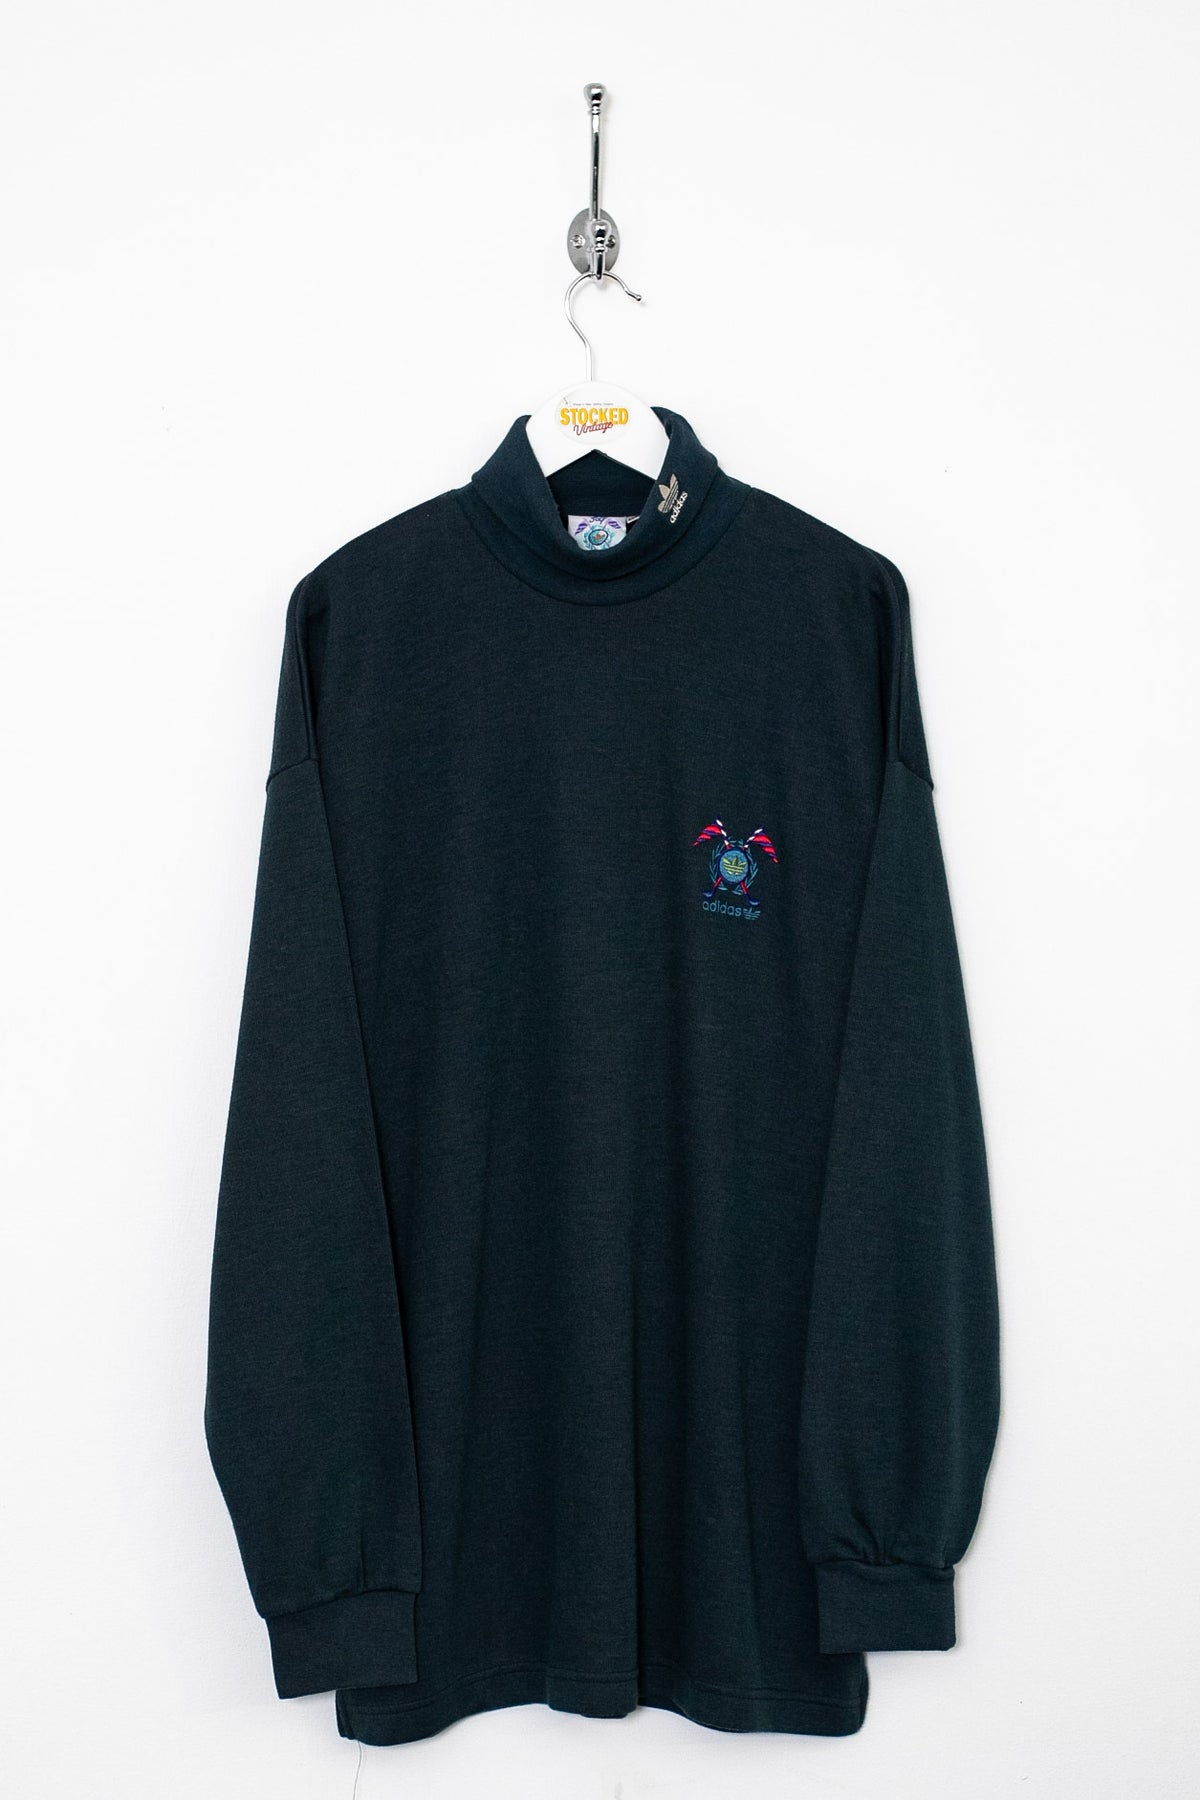 90s Adidas Golf Turtle Neck Sweatshirt (XL)